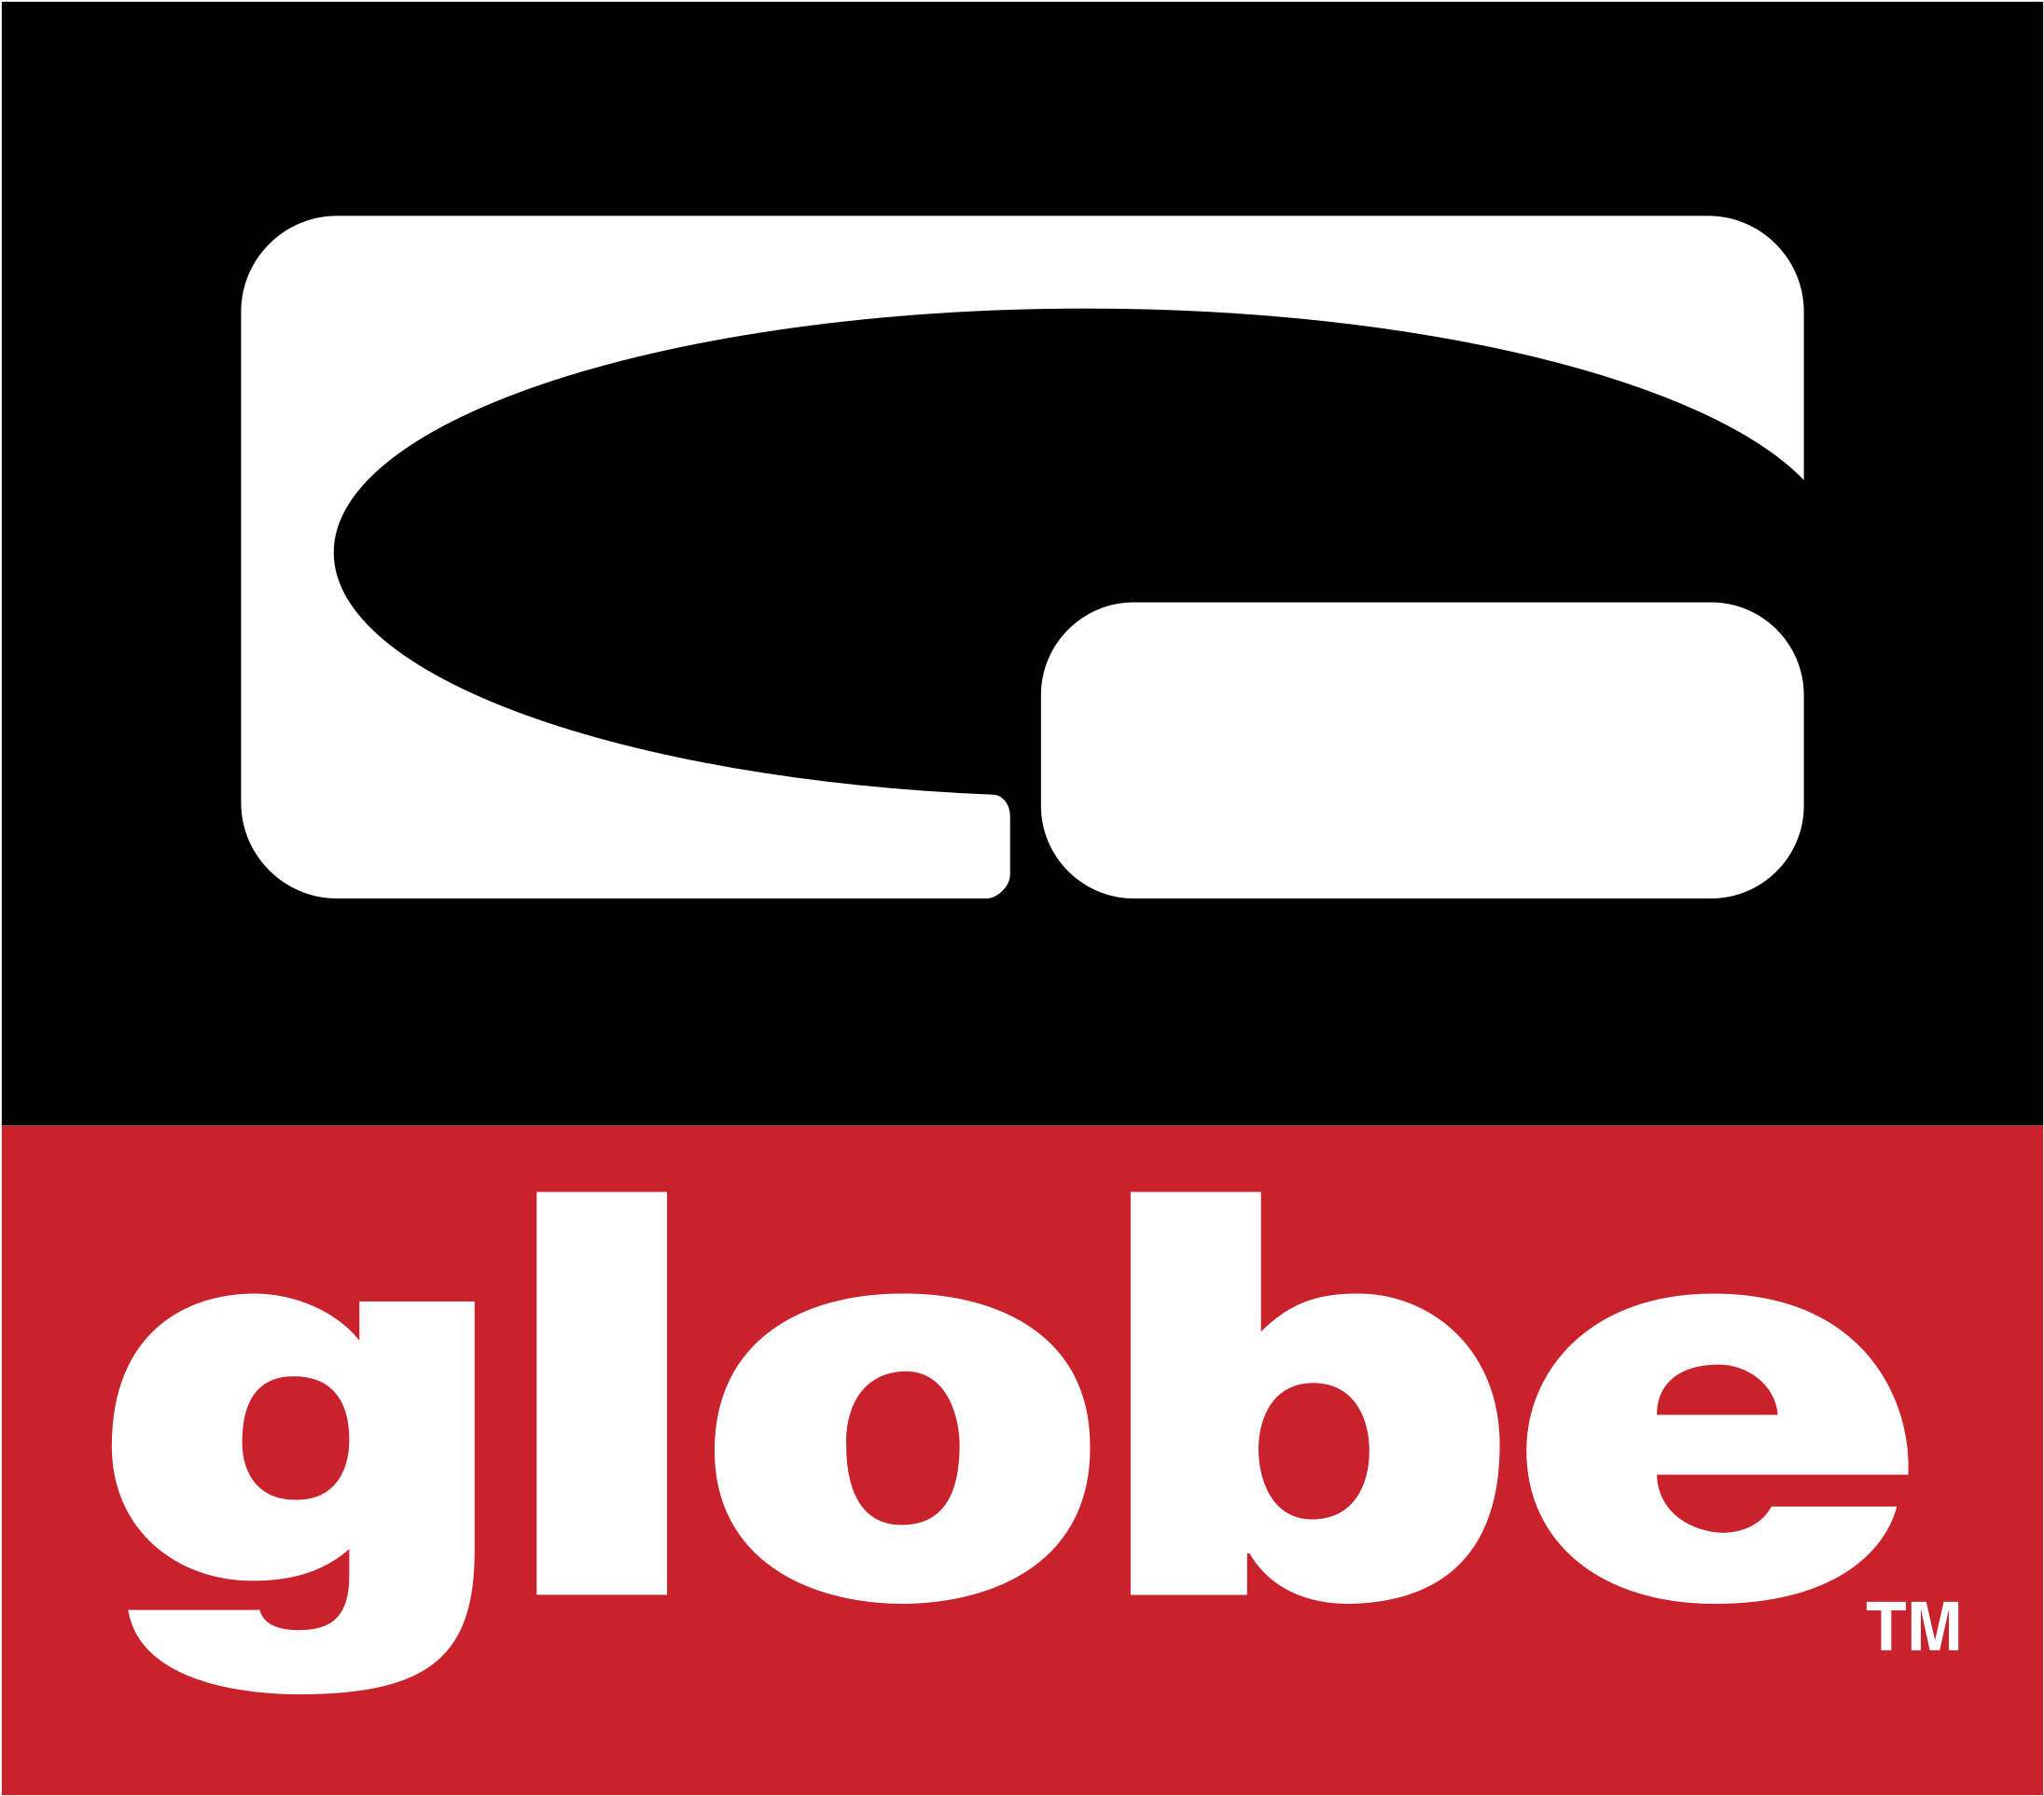 Globe Logo Black And White - Globe International (2400x2400)